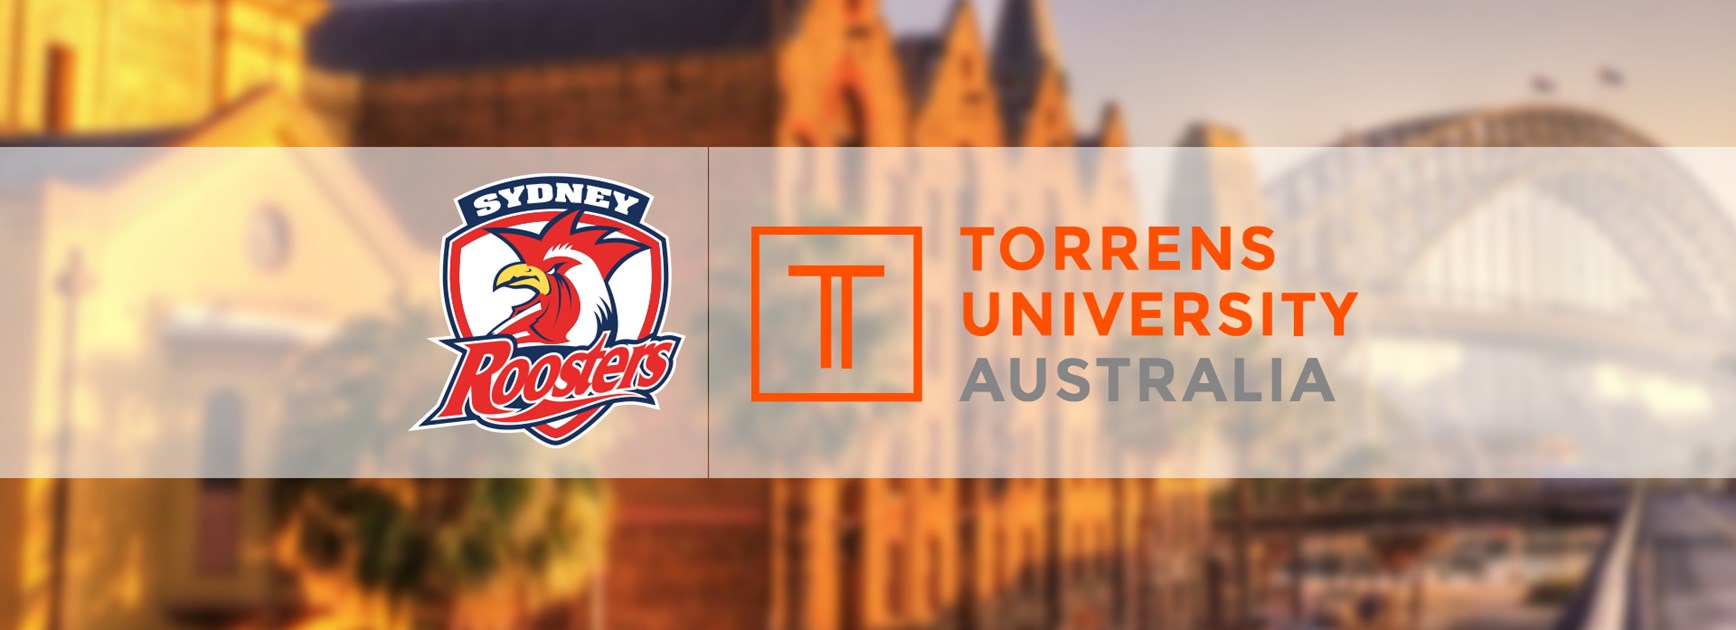 Sydney Roosters & Torrens University Australia Enter Partnership With Distinction